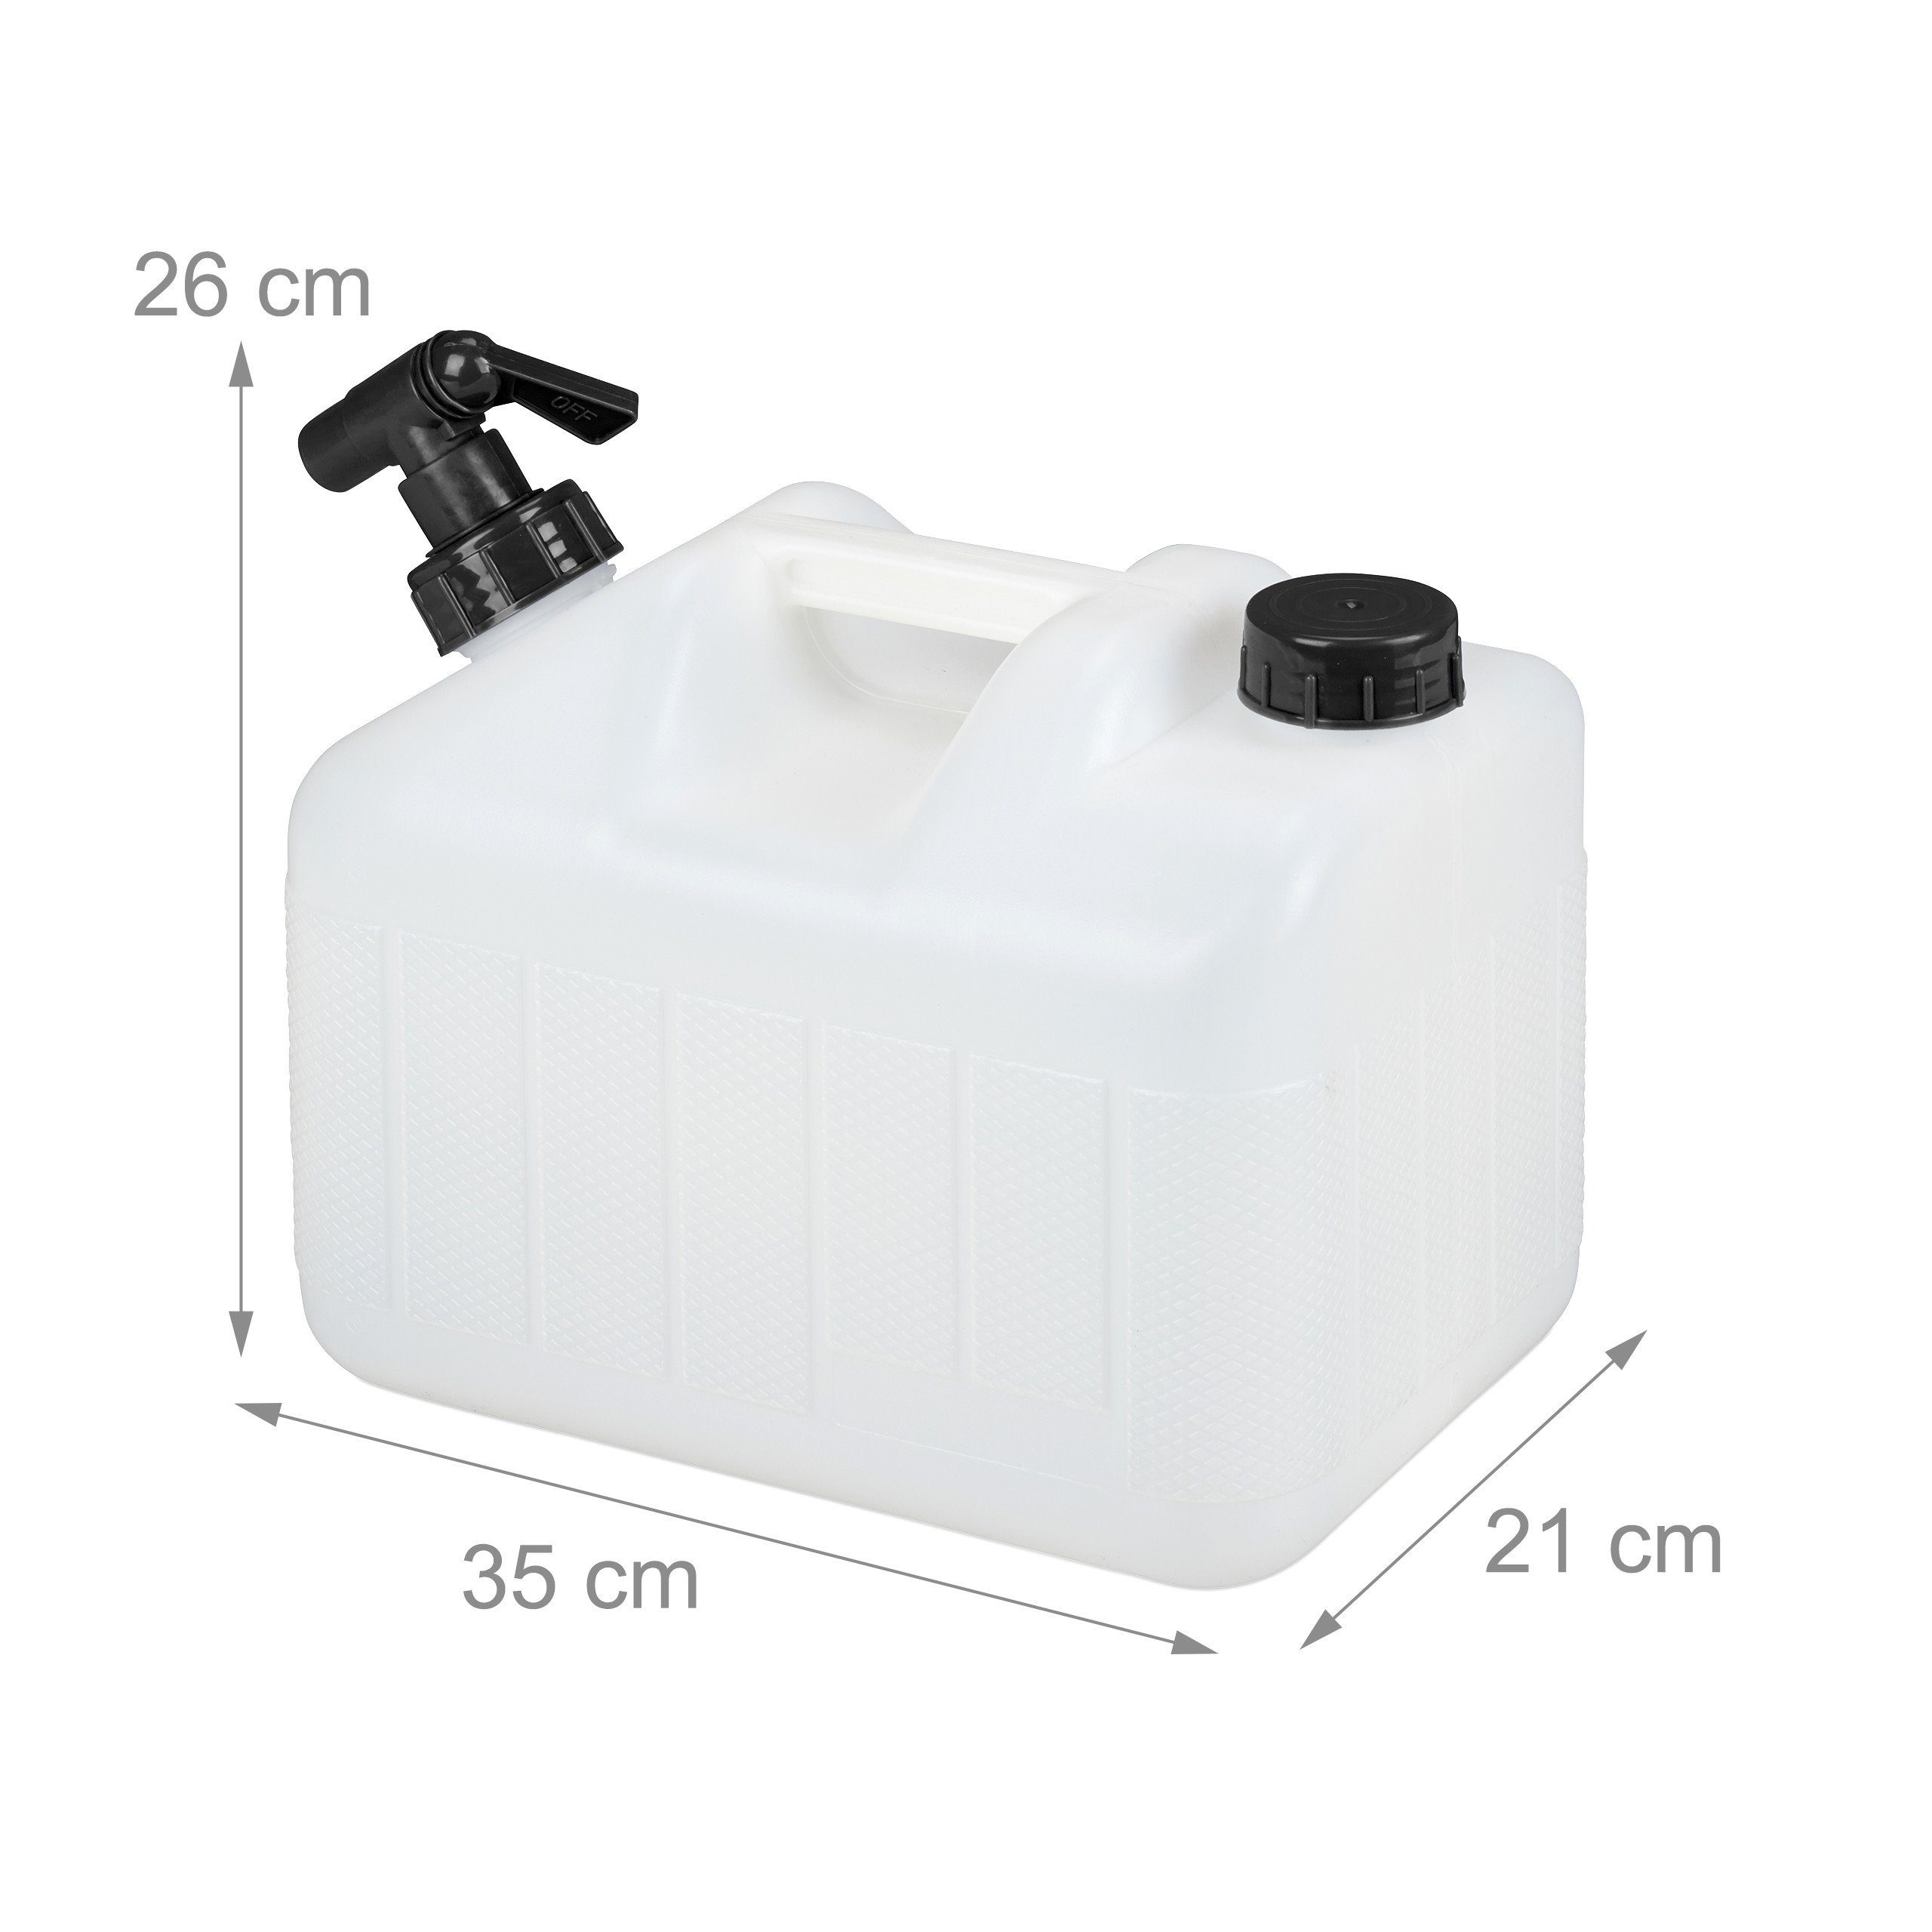 Kanister Hahn, relaxdays Wasserkanister 10 Liter mit